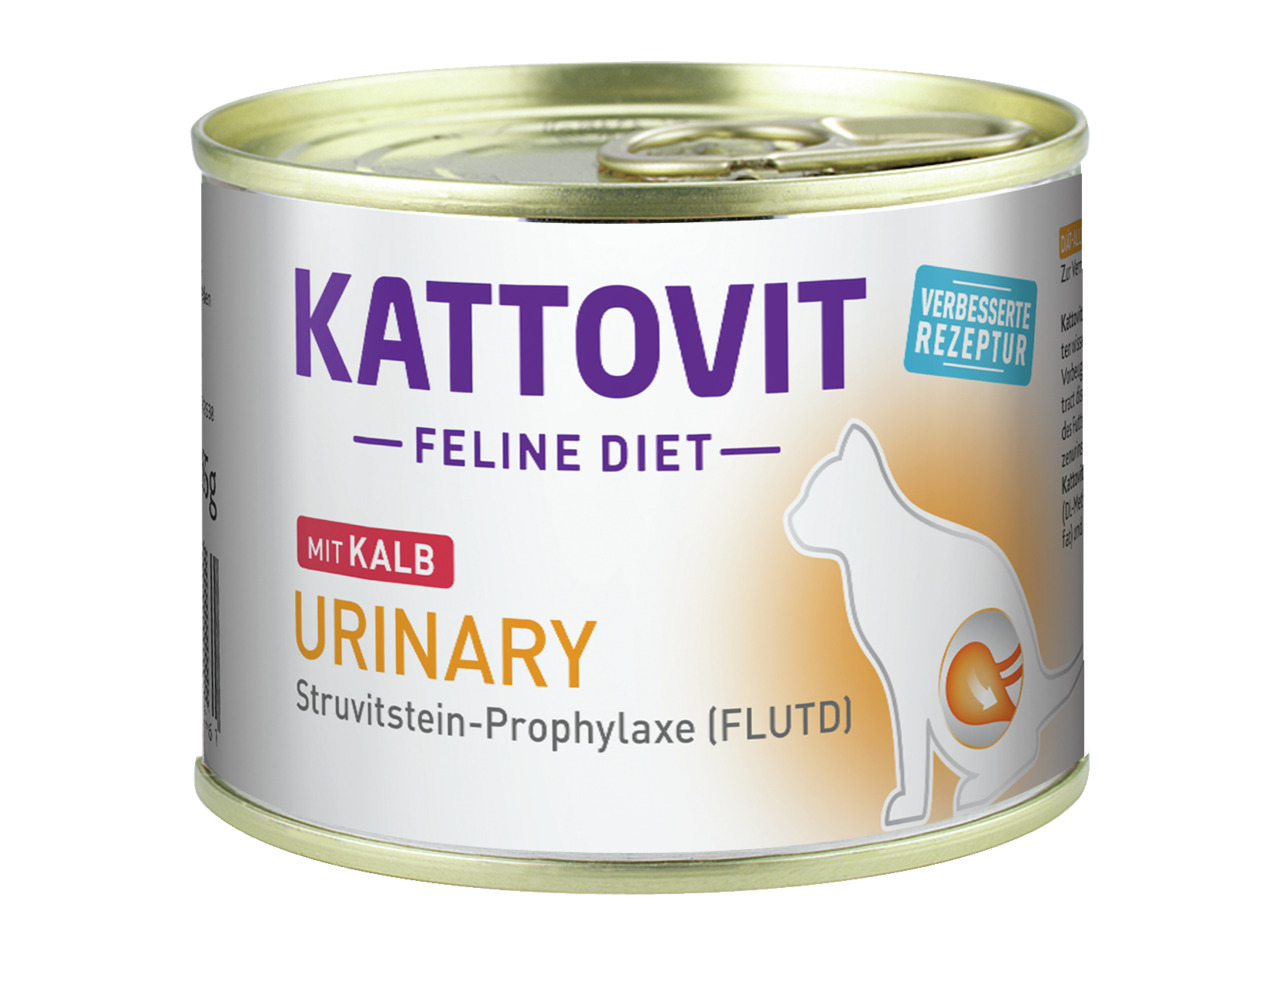 Kattovit Feline Diet Urinary mit Kalb Katzen Nassfutter 185 g